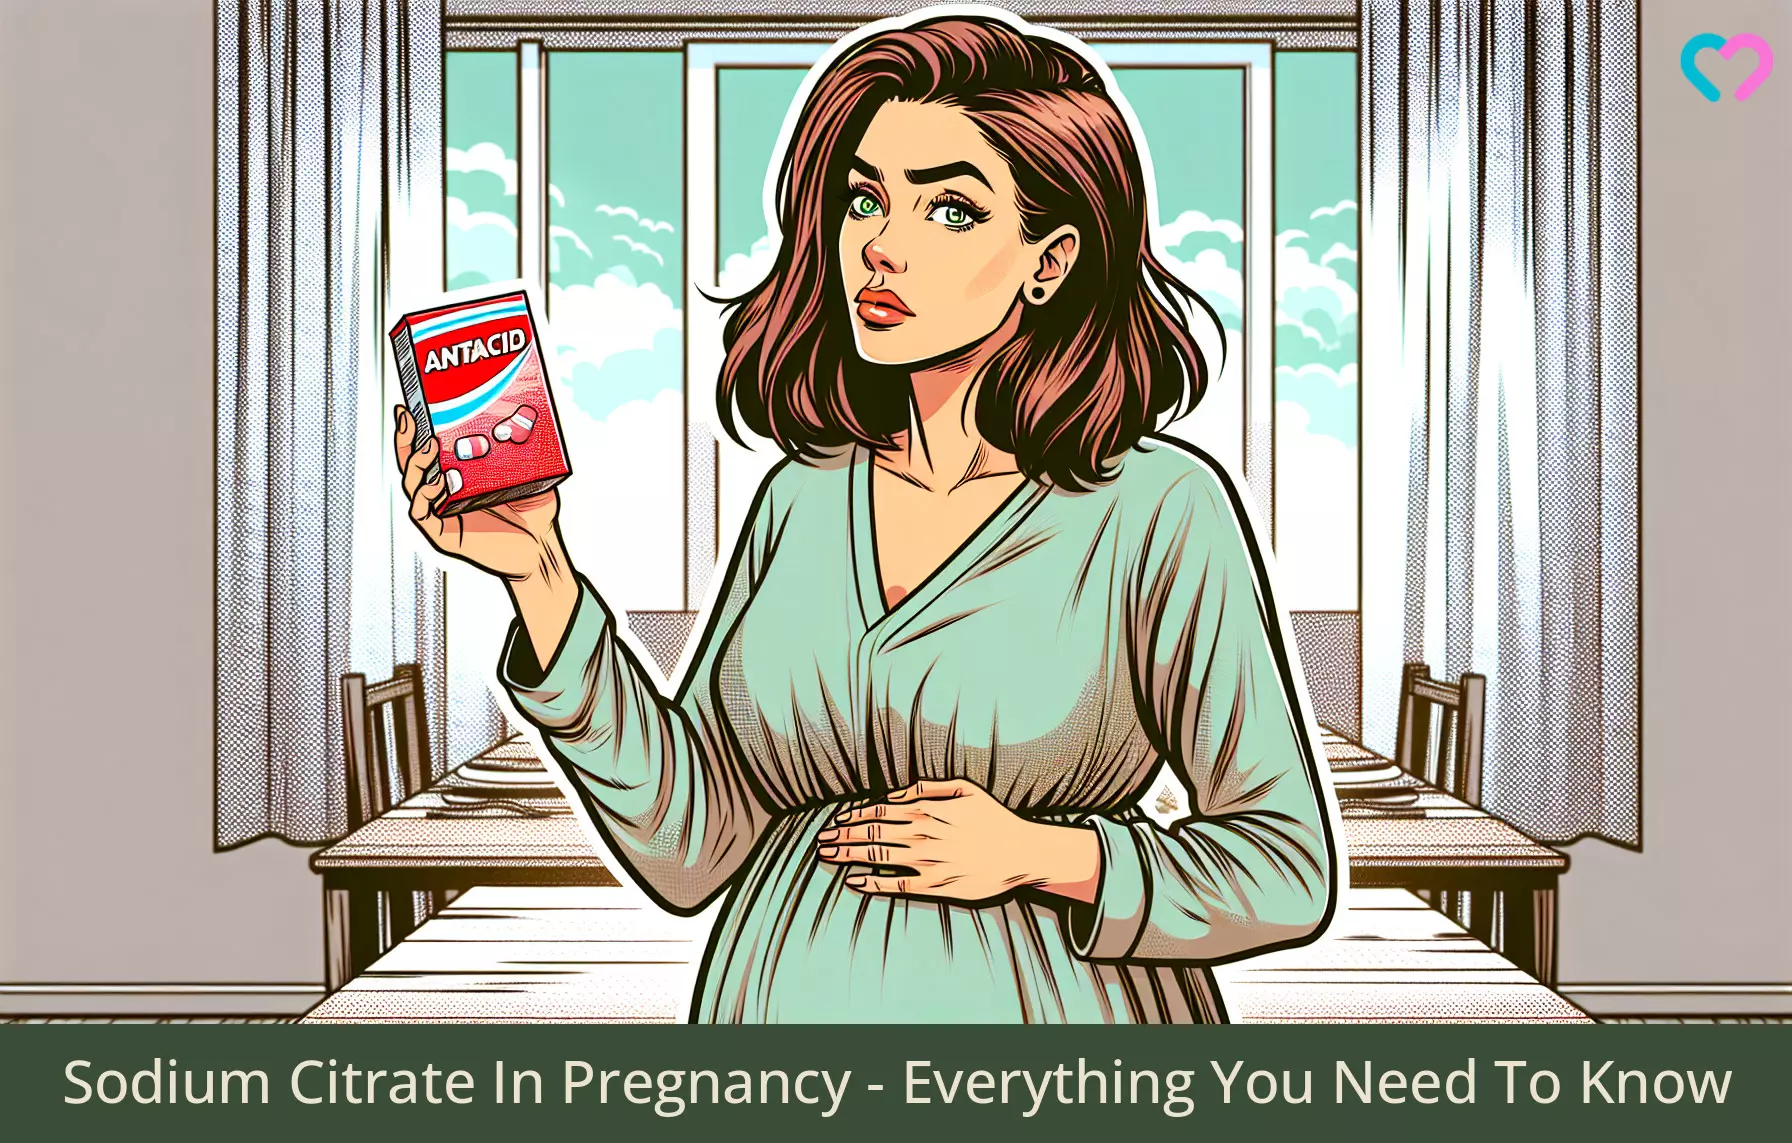 Eat Sodium Citrate During Pregnancy_illustration